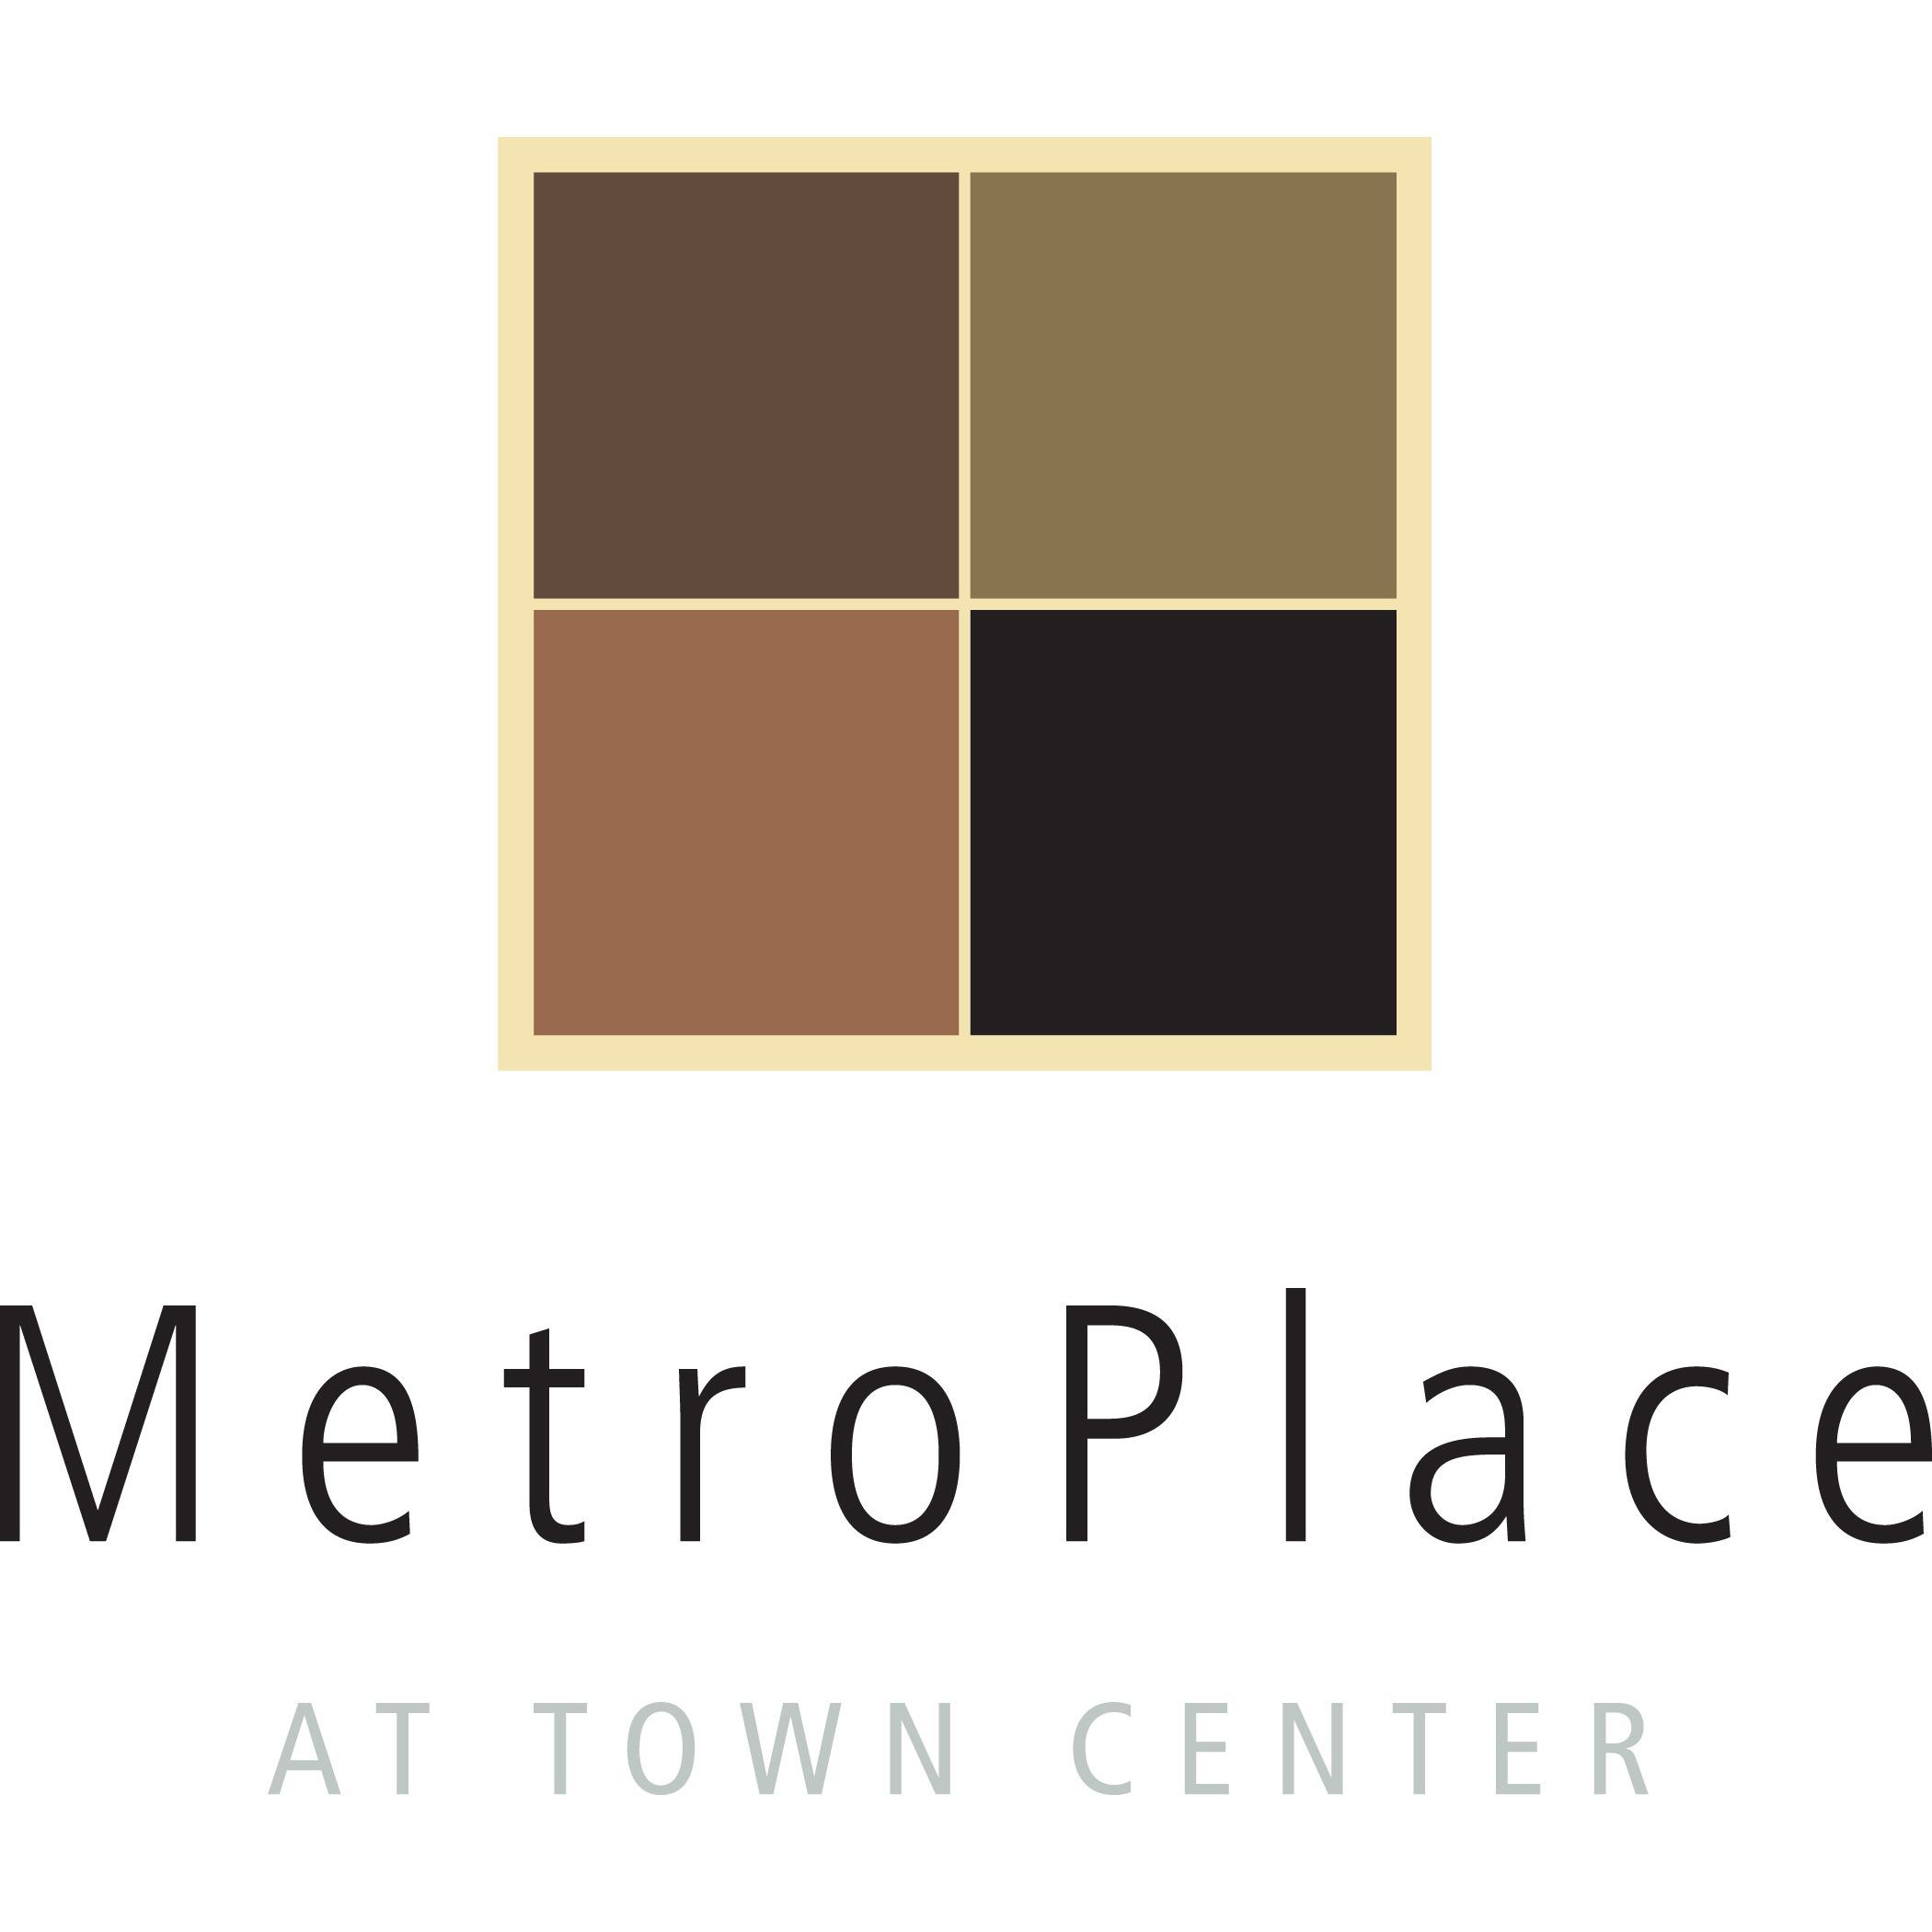 MetroPlace at Town Center